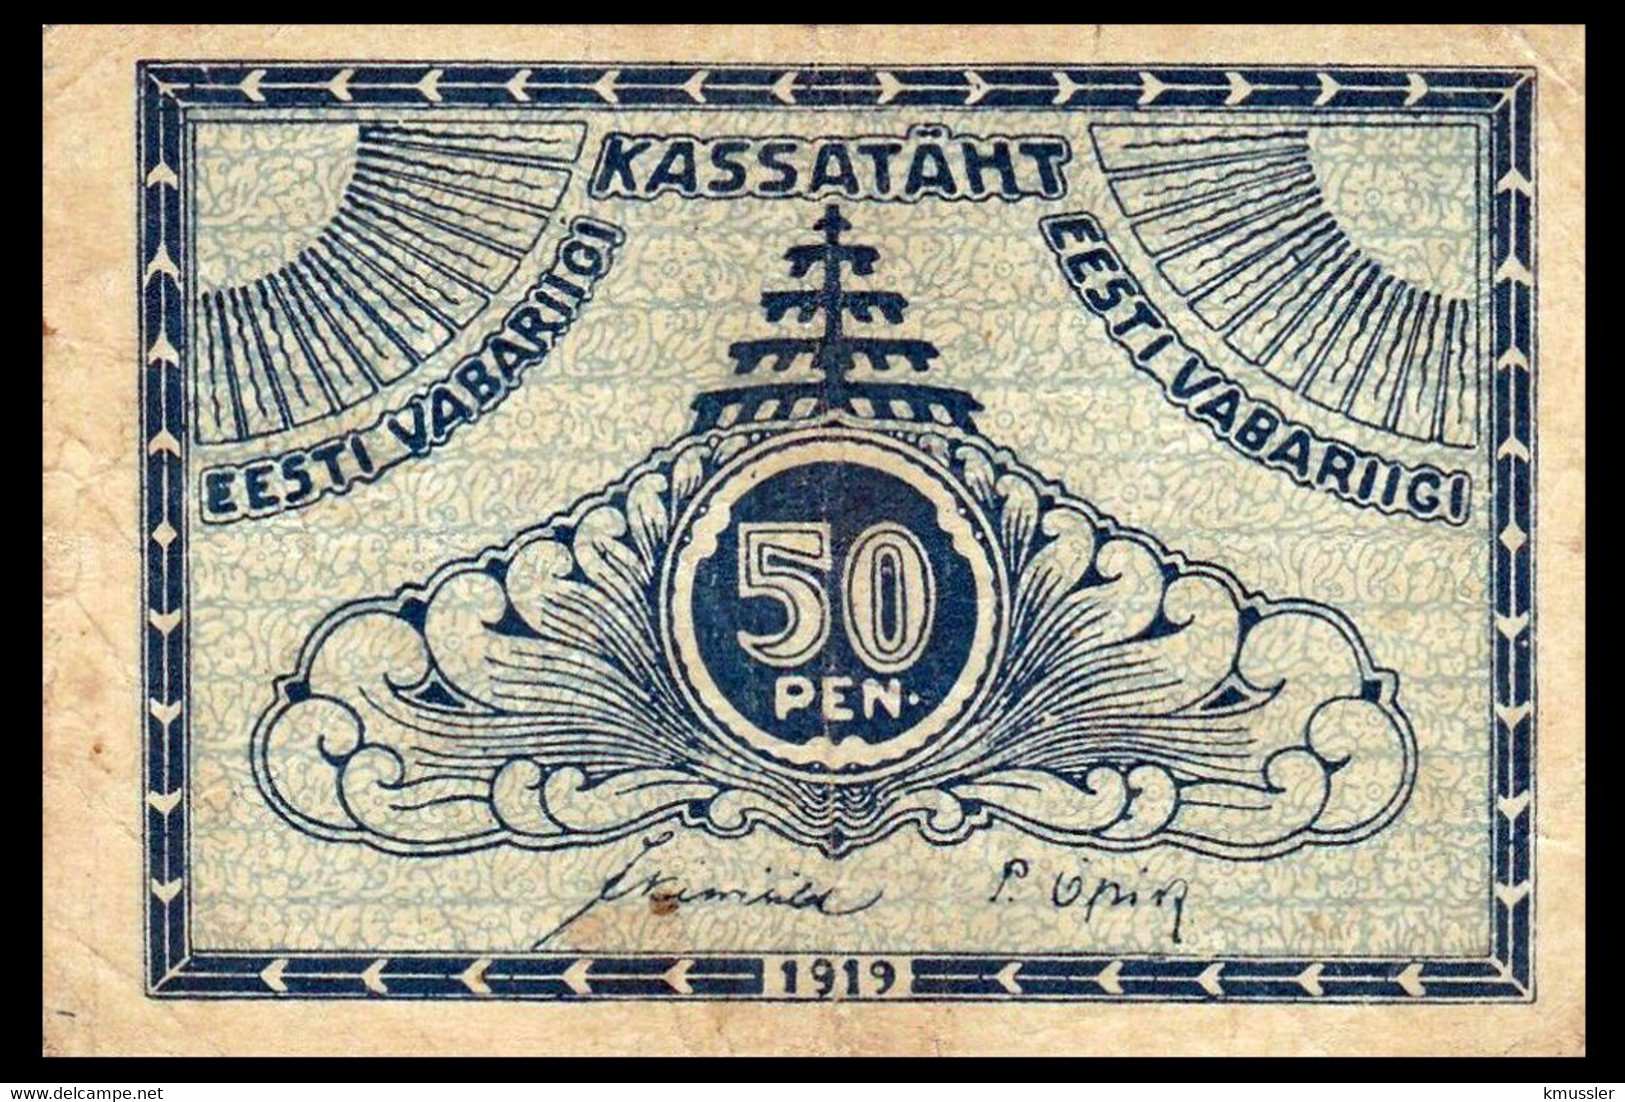 # # # Banknote Estland (Esti) 50 Penni 1919 # # # - Estland